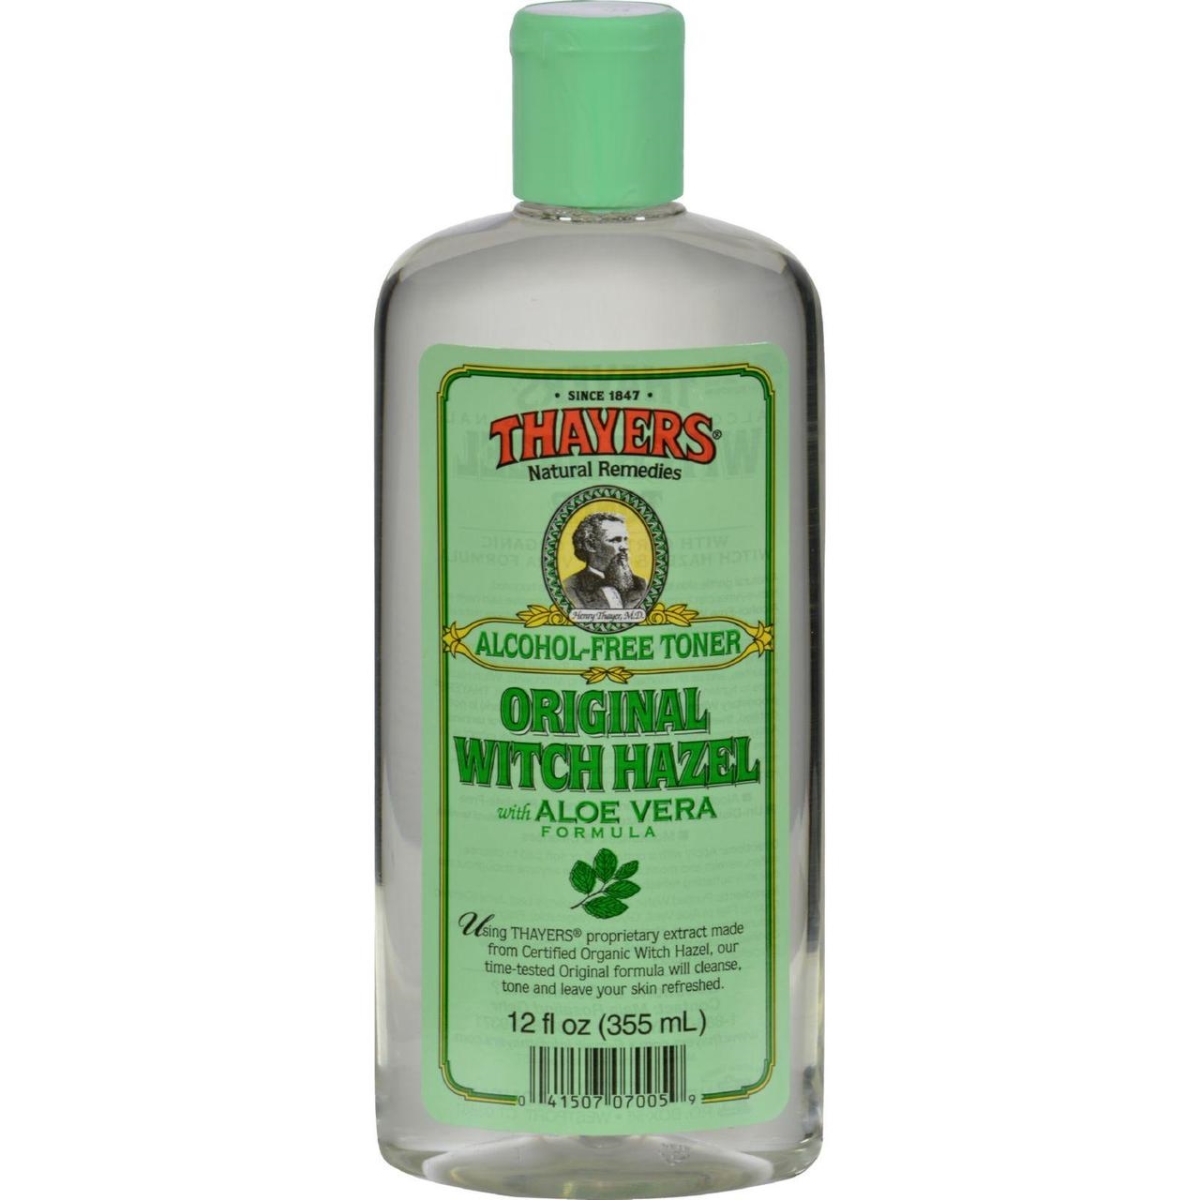 Hg0216432 12 Fl Oz Witch Hazel With Aloe Vera Original Alcohol Free